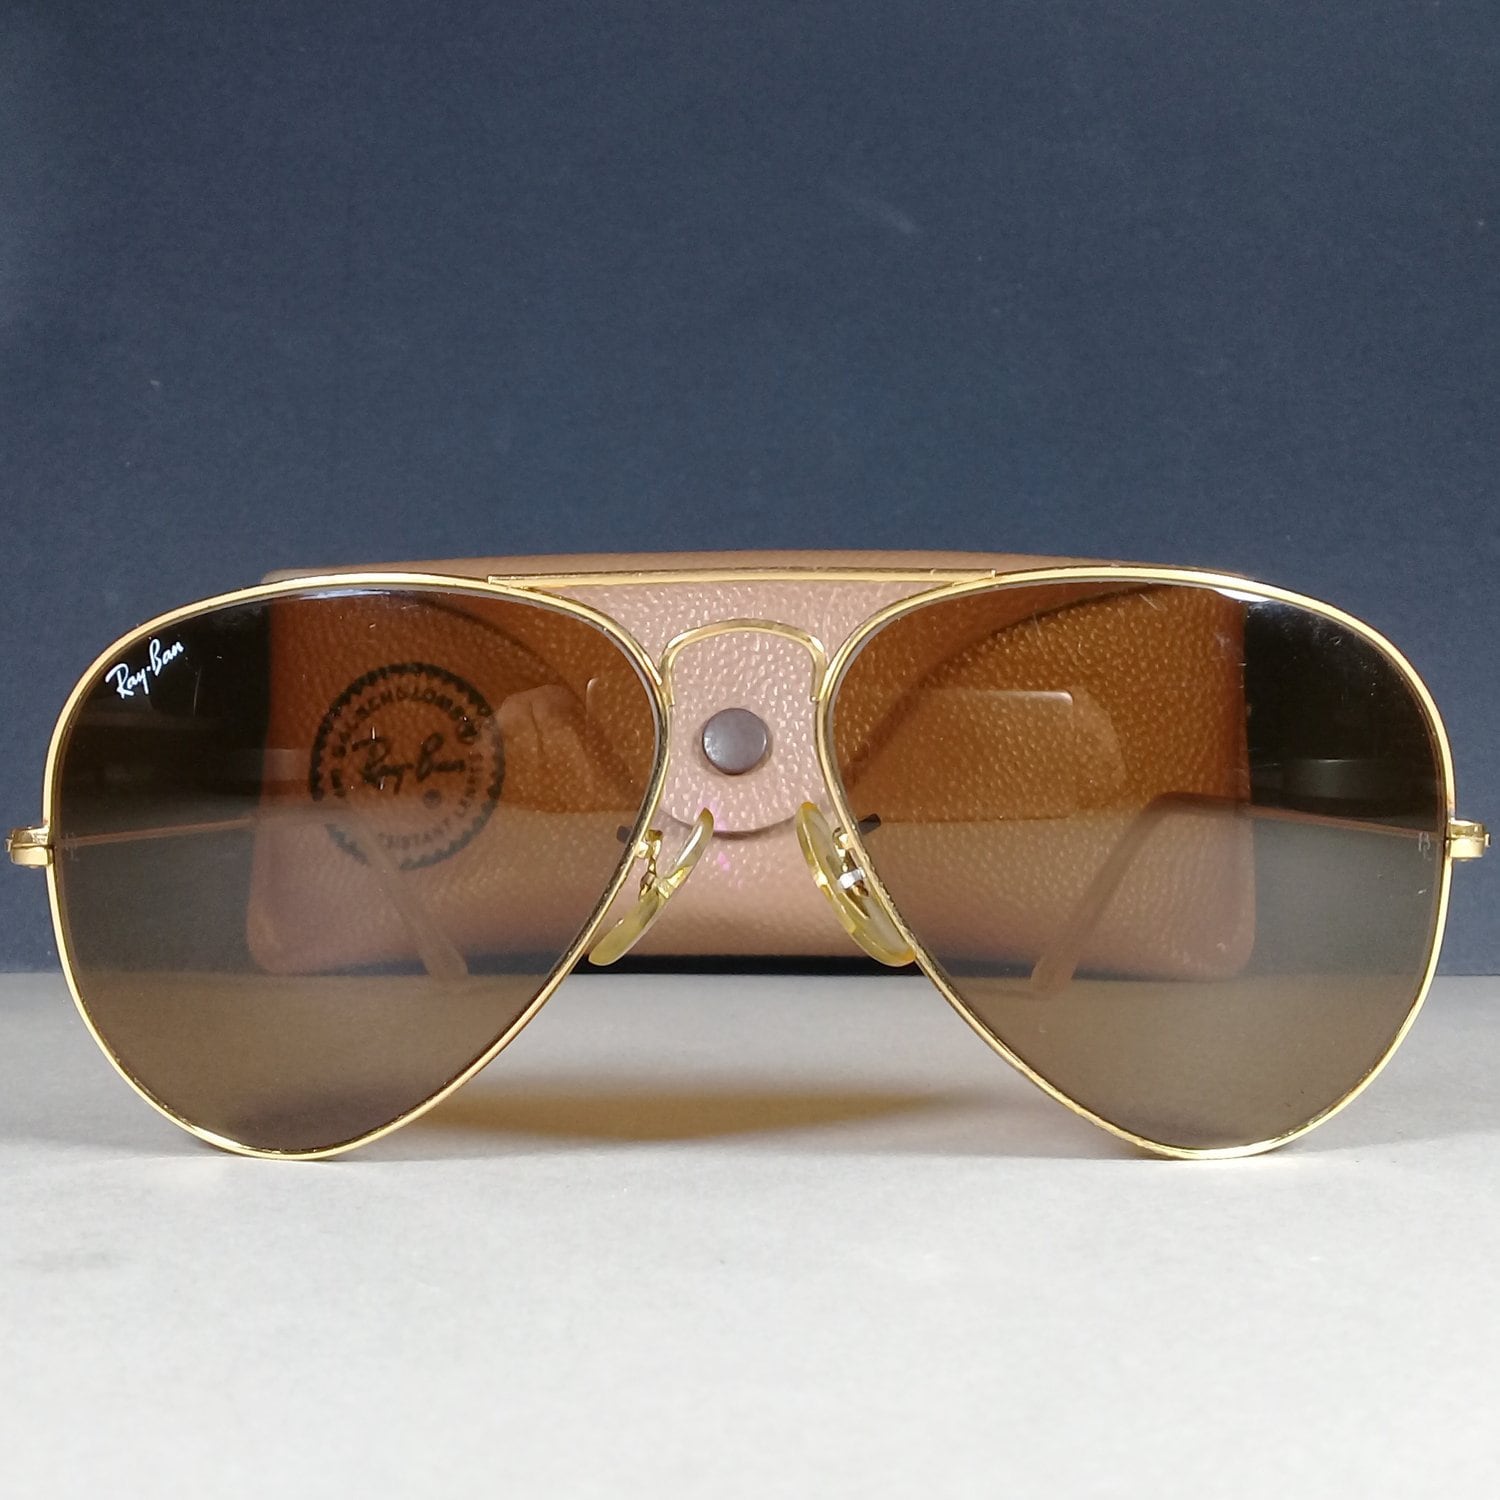 Ray Ban Bausch & Lomb 58-14 Gold/Brown Aviator Pilot B&L US Made Sunglasses w/Case